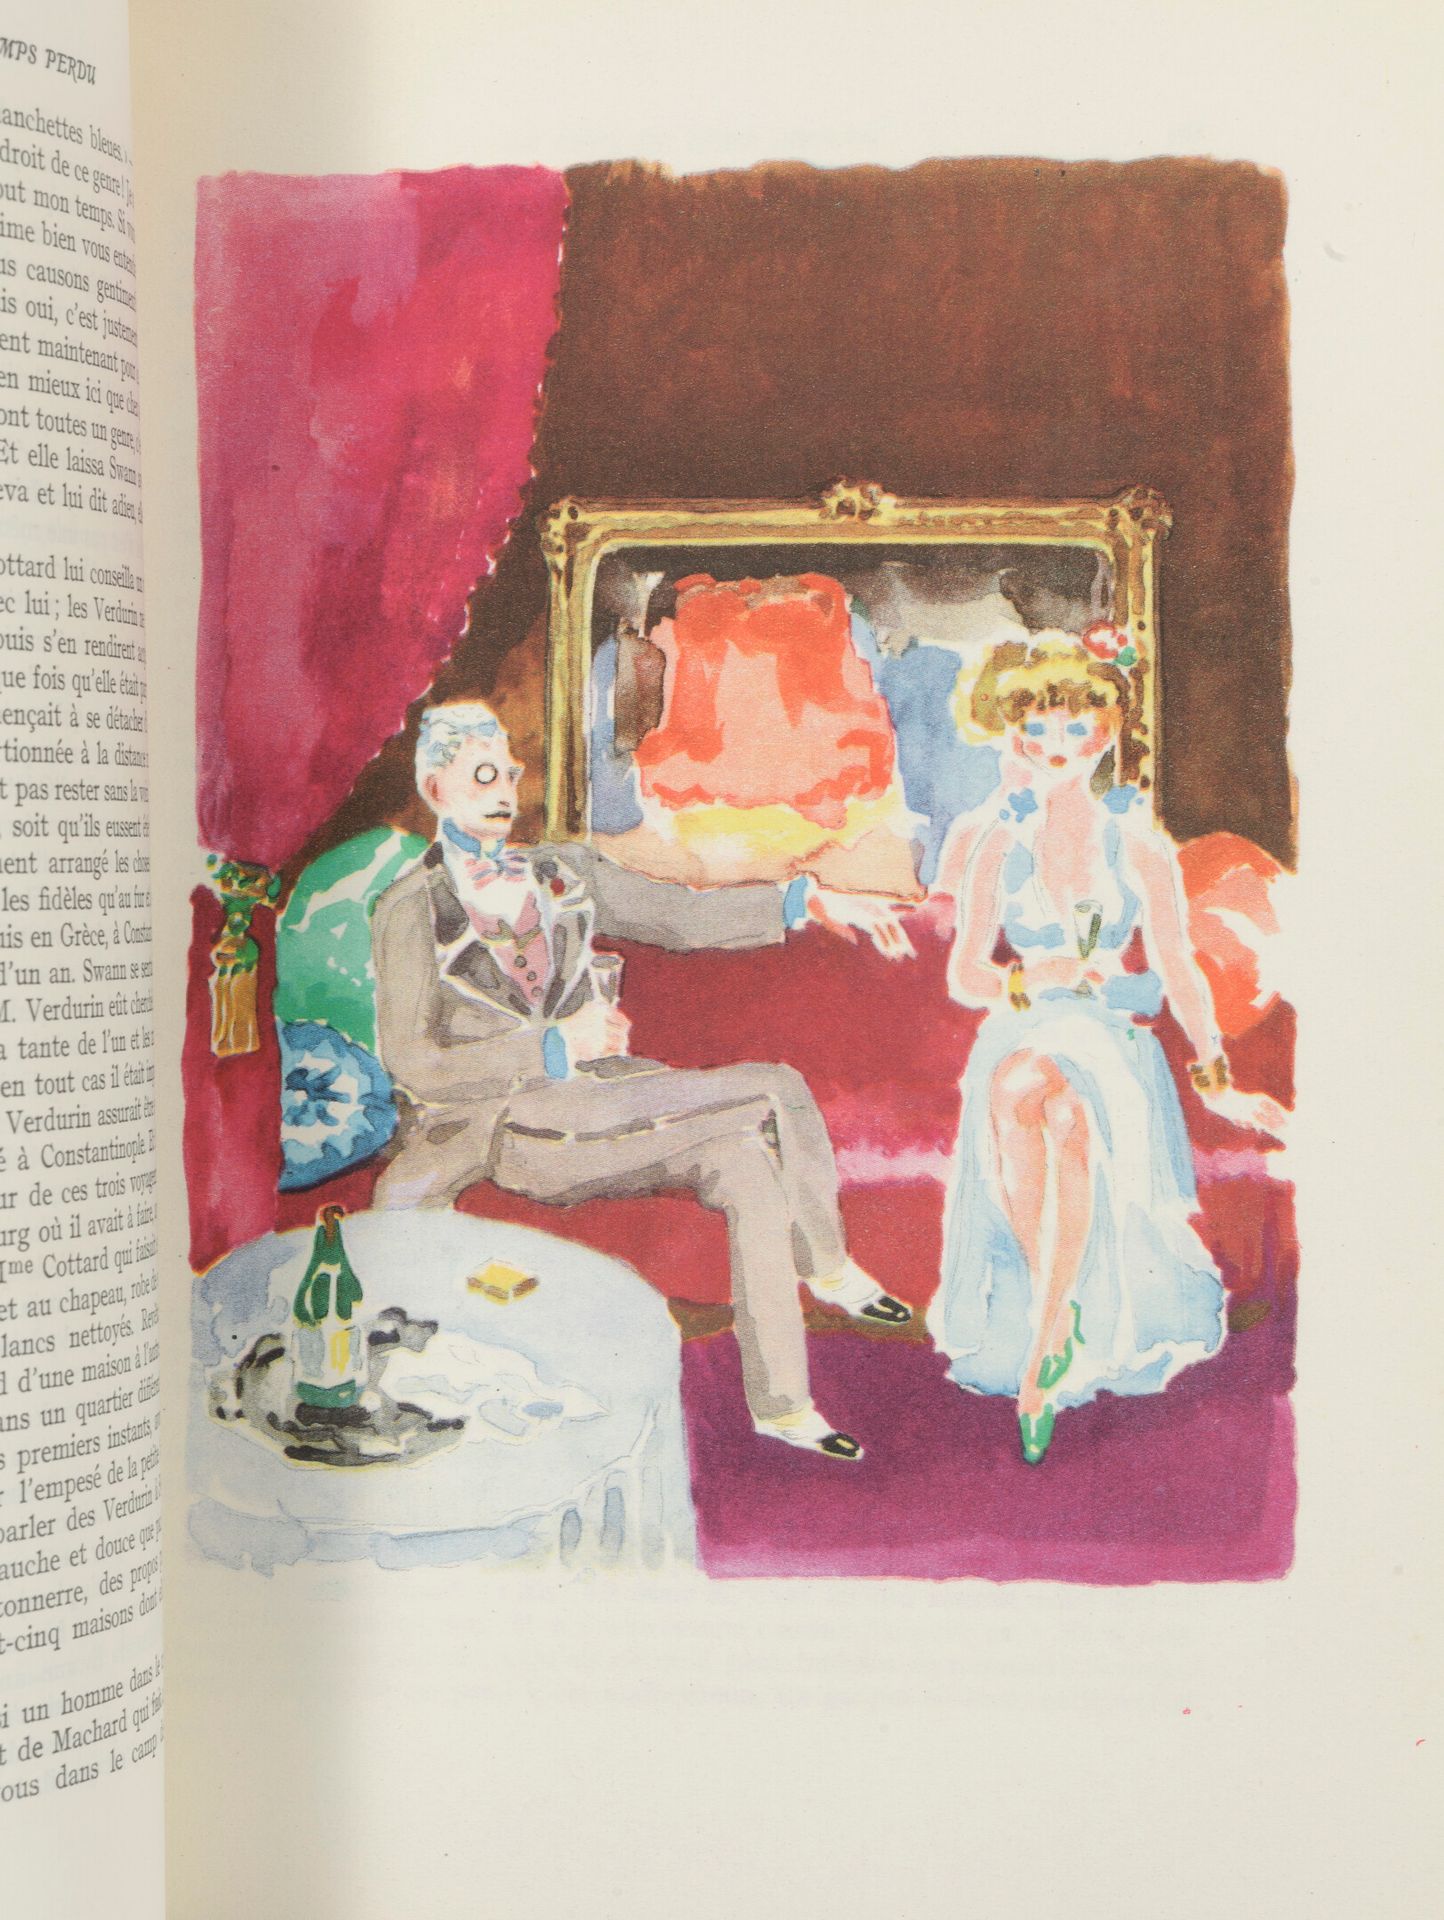 PROUST, Marcel 寻找失去的时间。

由Kees VAN DONGEN绘制的七十七幅水彩画插图。

Gallimard出版社，巴黎，1947年。

&hellip;